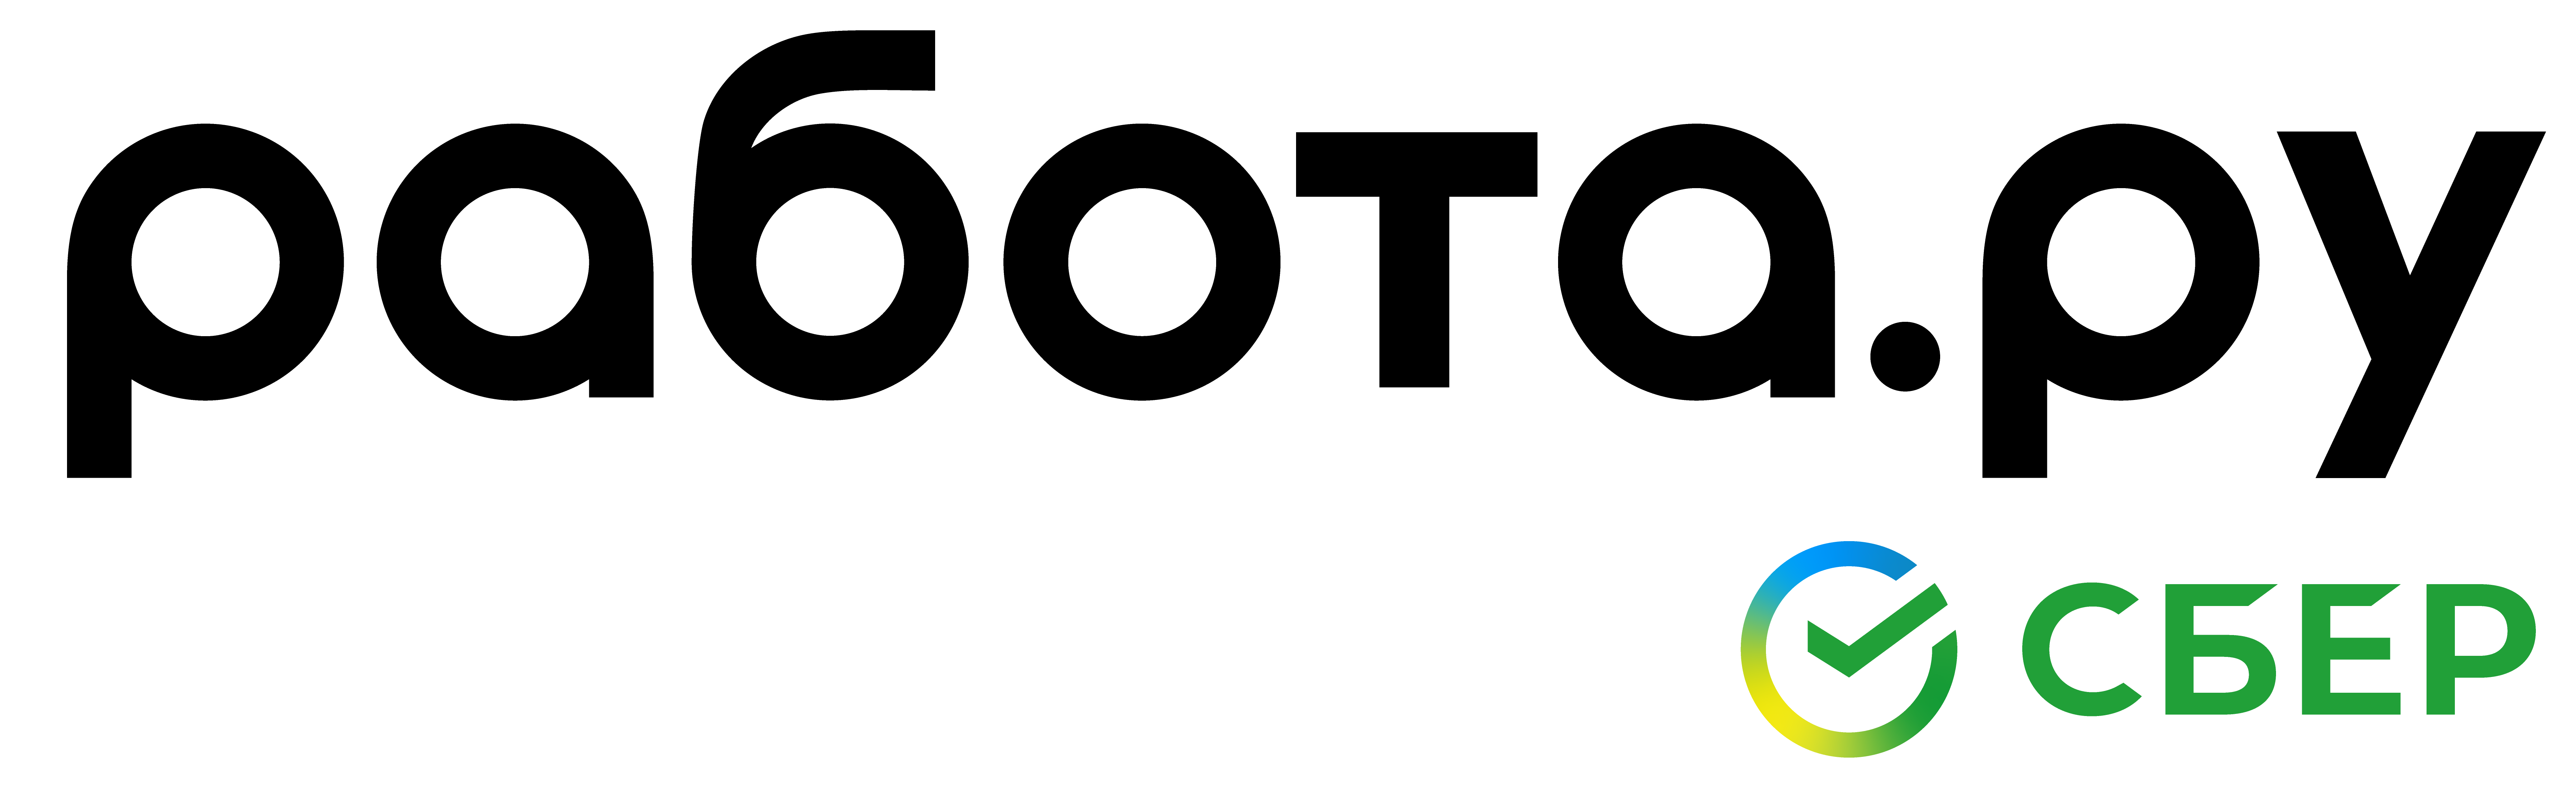 netwrix logo